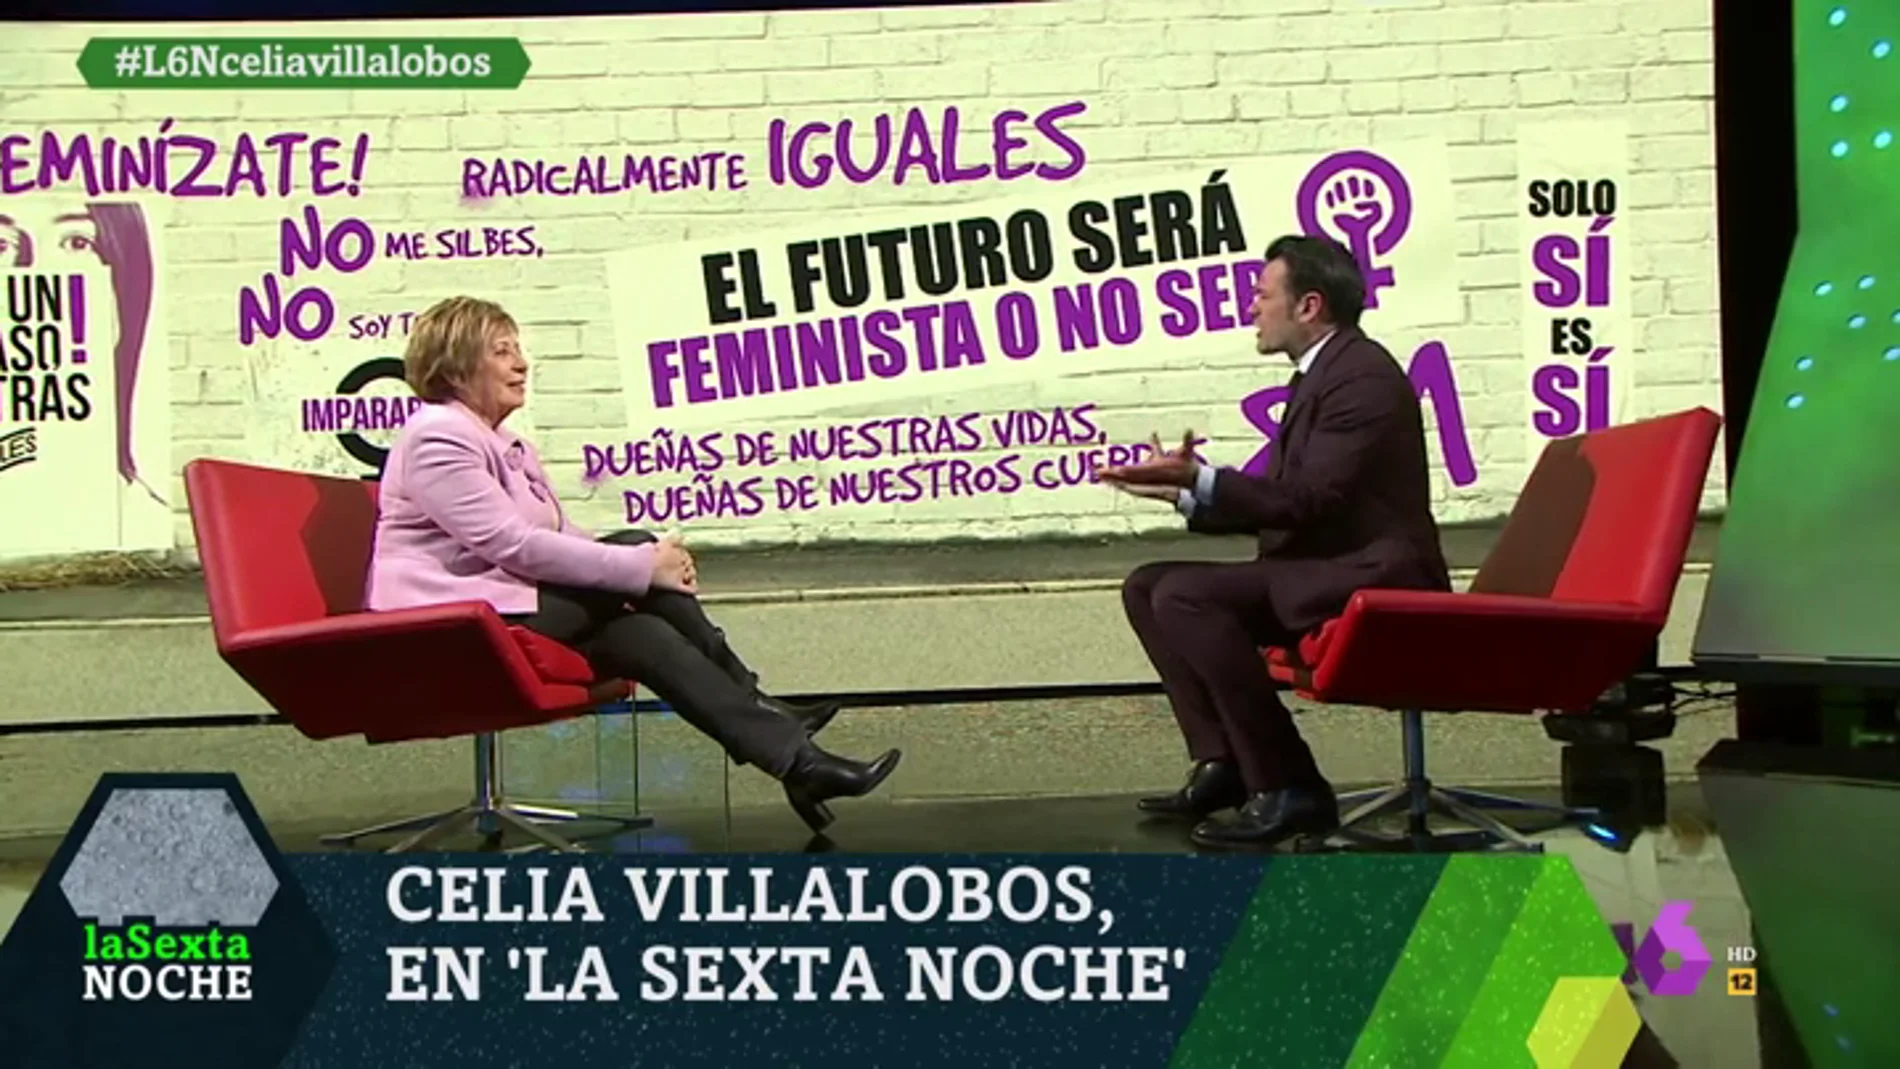 Celia Villalobos: "Me preocupa que con este nuevo feminismo pasemos de ser oprimidas a ser opresoras"